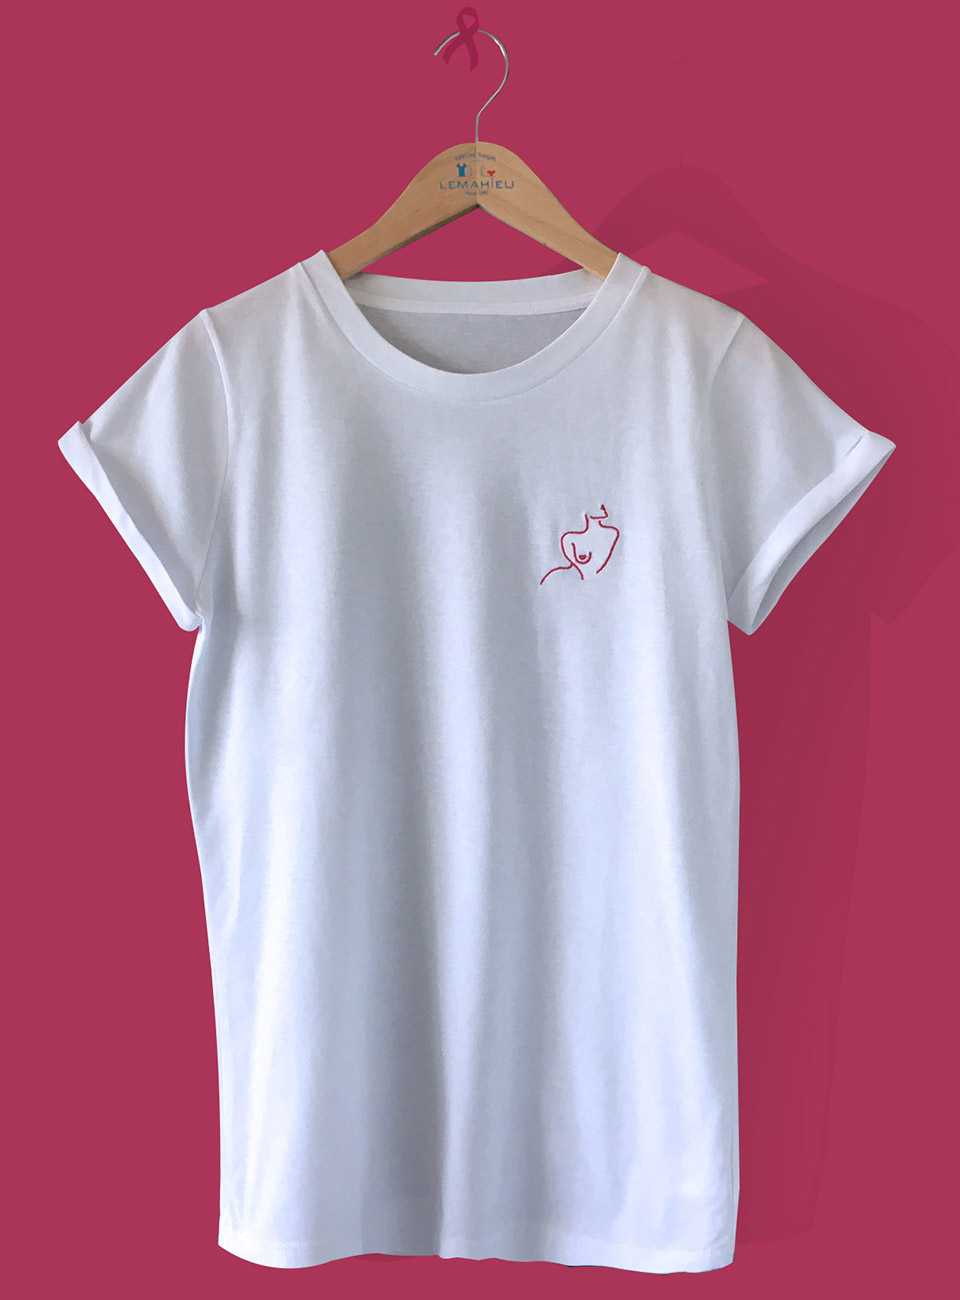 Tee shirt Octobre Rose - Made in France | Lemahieu